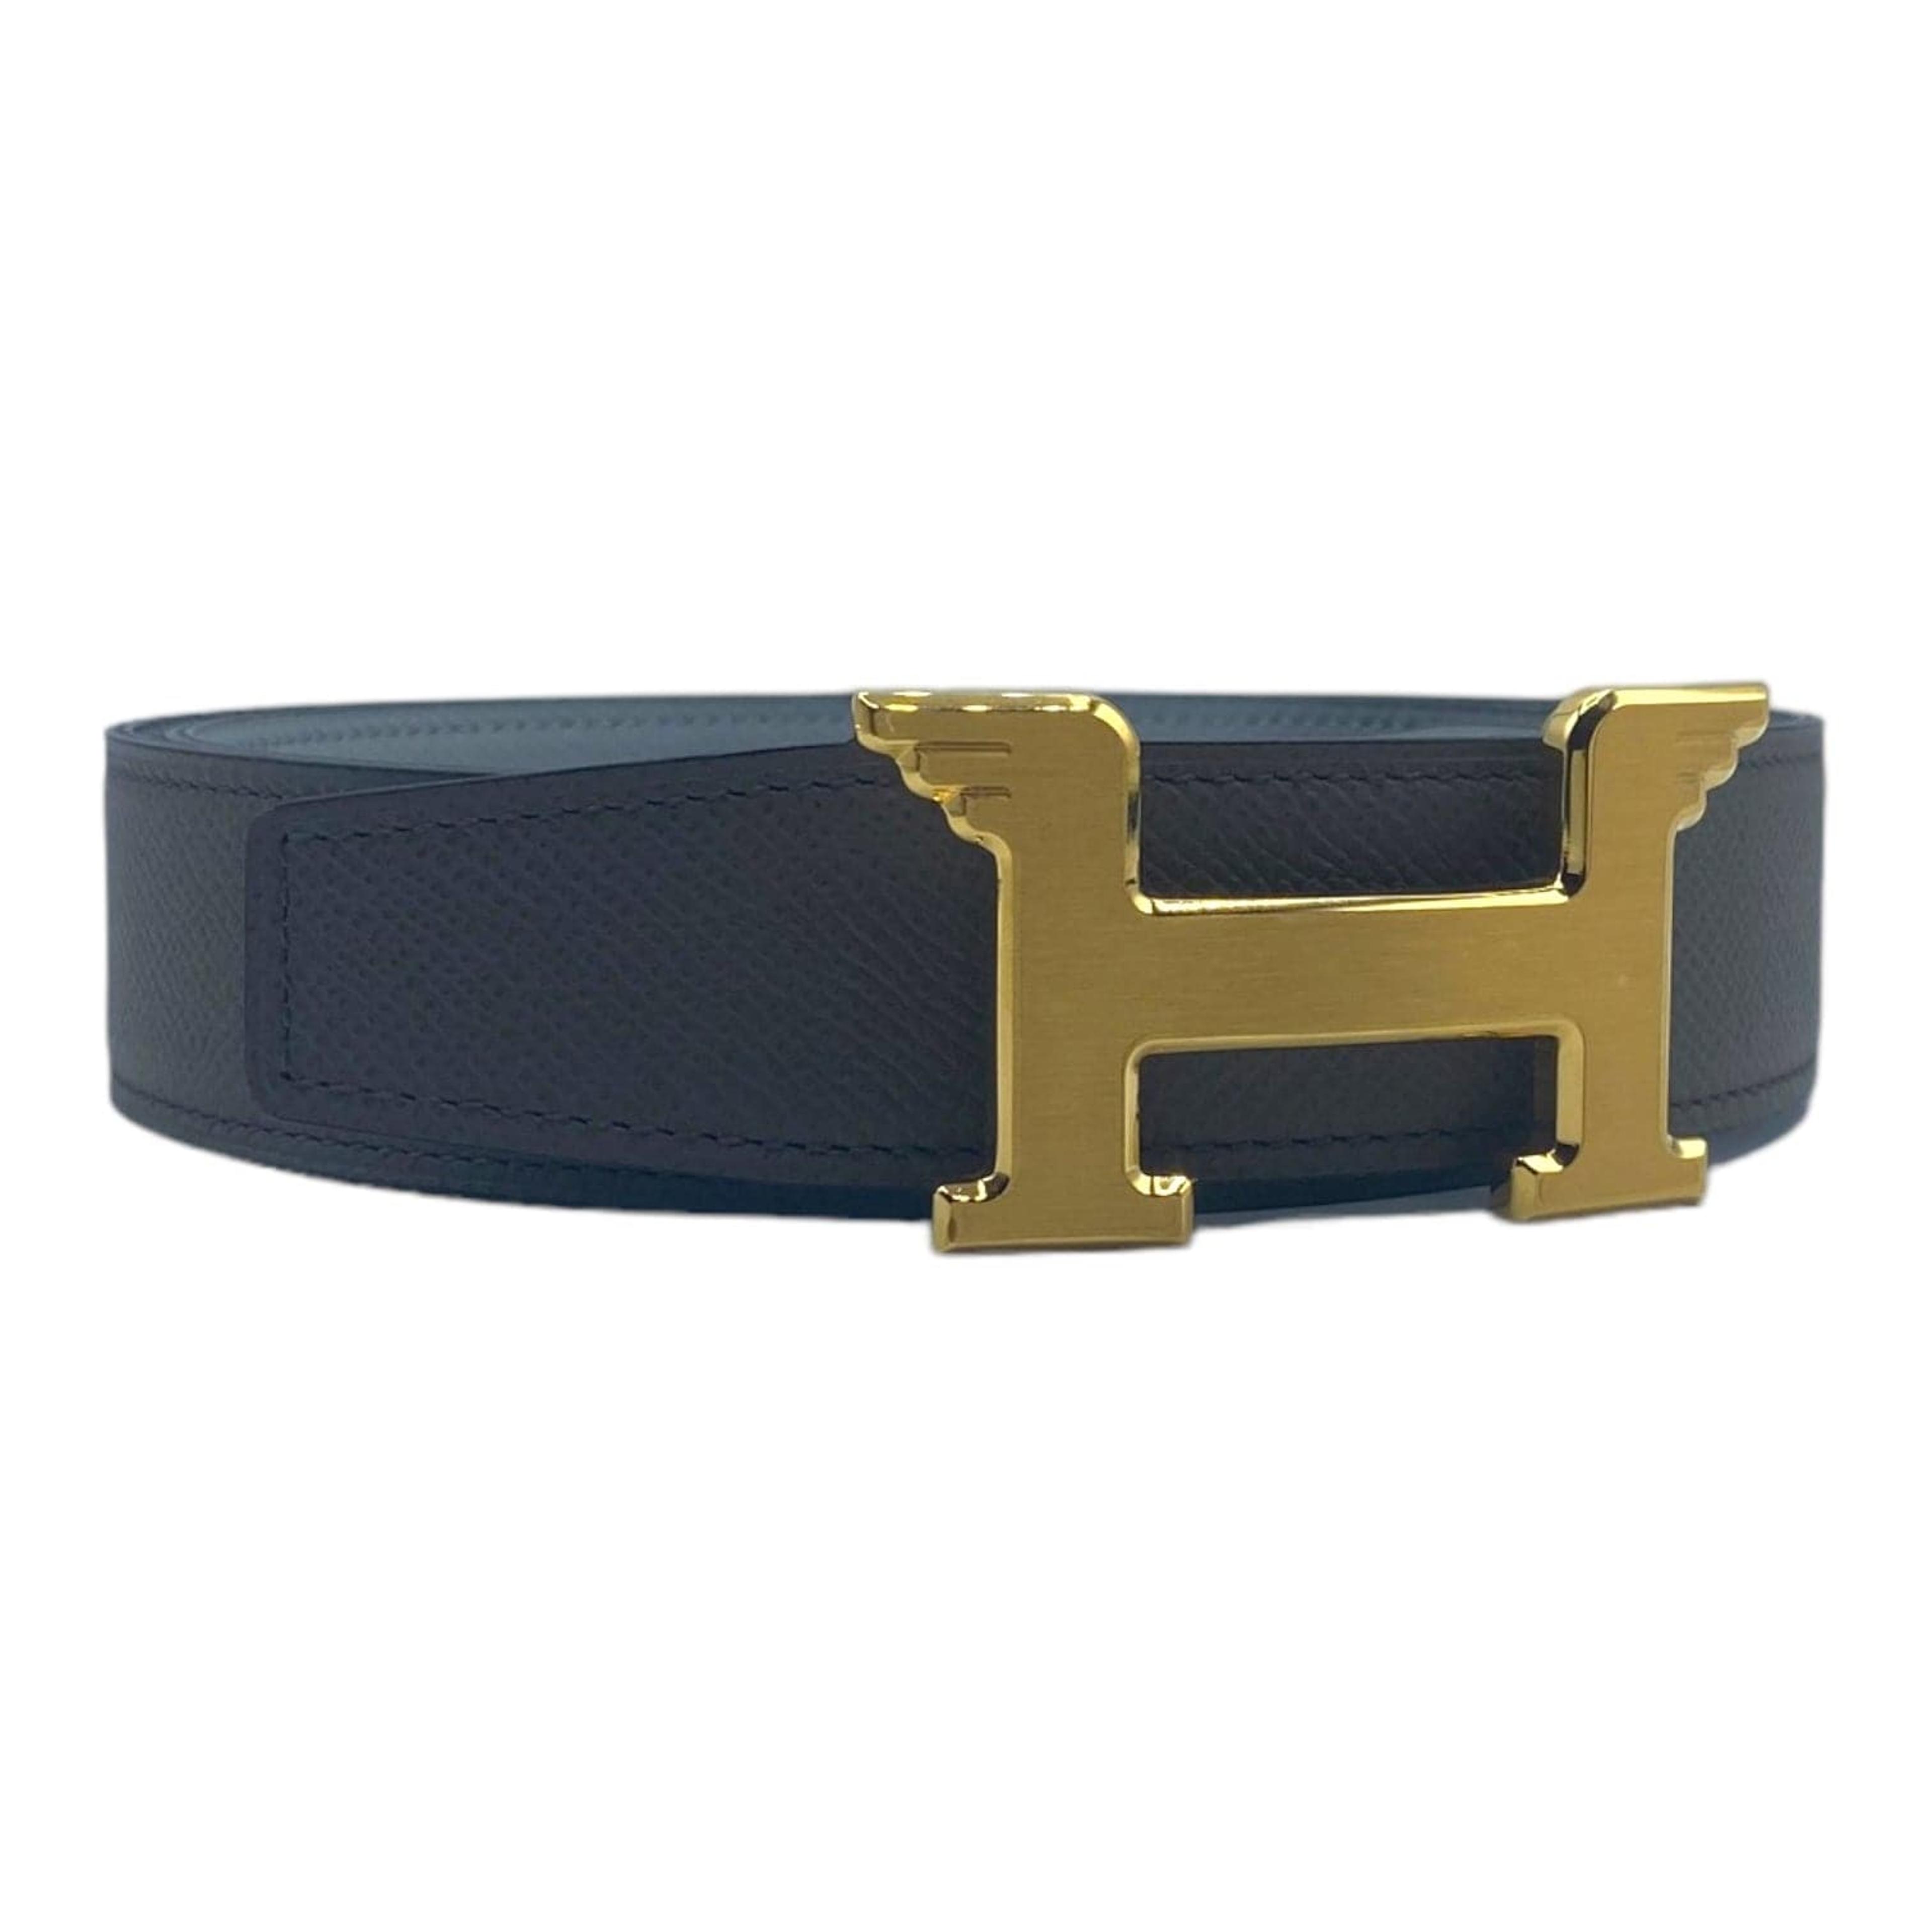 Alternate View 3 of Hermes Reversible Leather Belt Blue/Brown